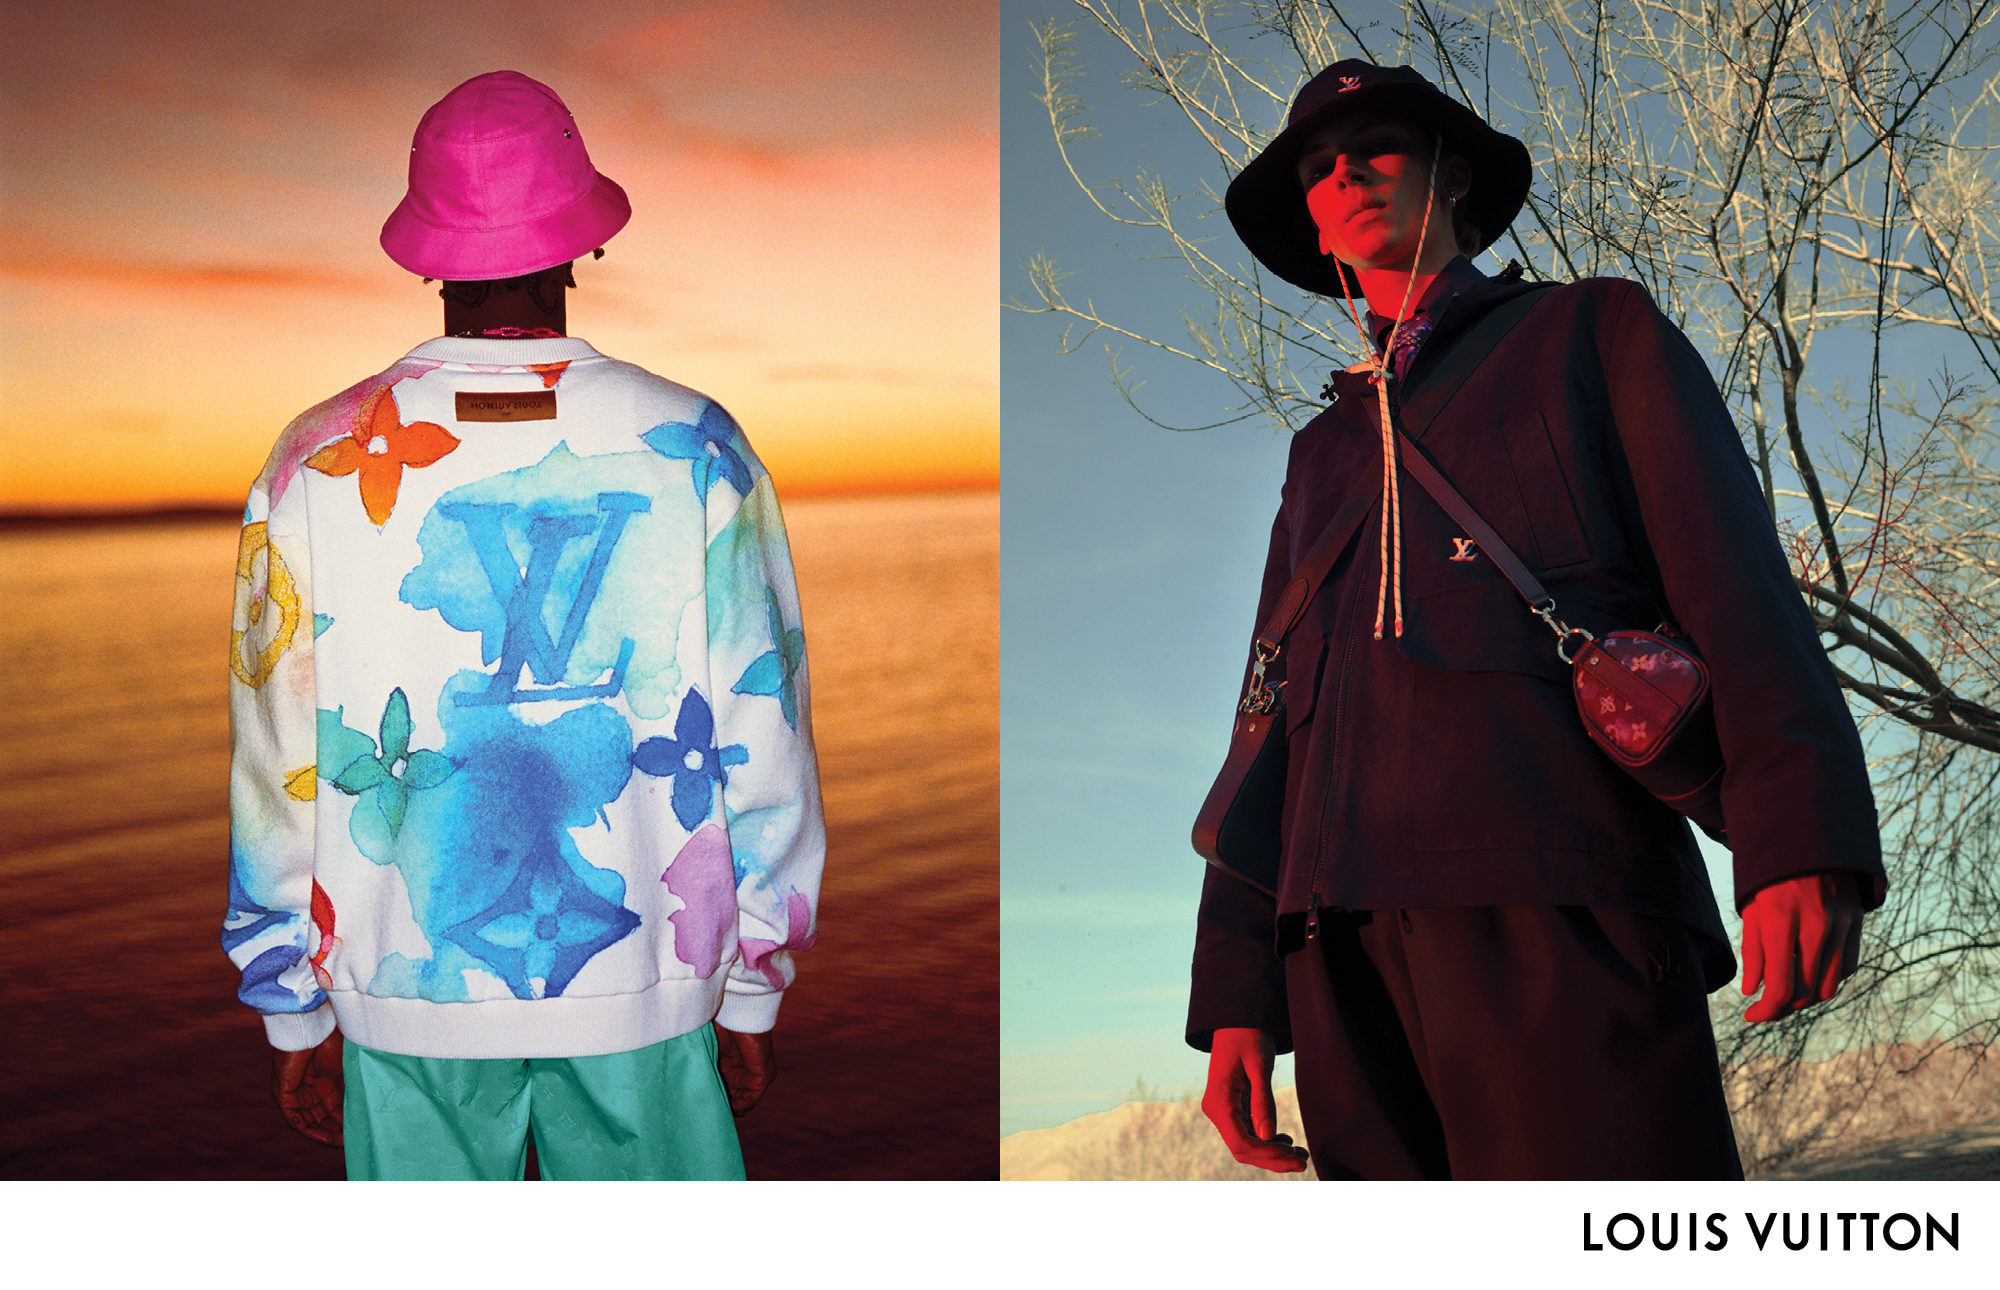 Louis Vuitton Summer 2021 Lookbook Starring 21 Savage – OVERSTANDARD –  Culture & Creativity